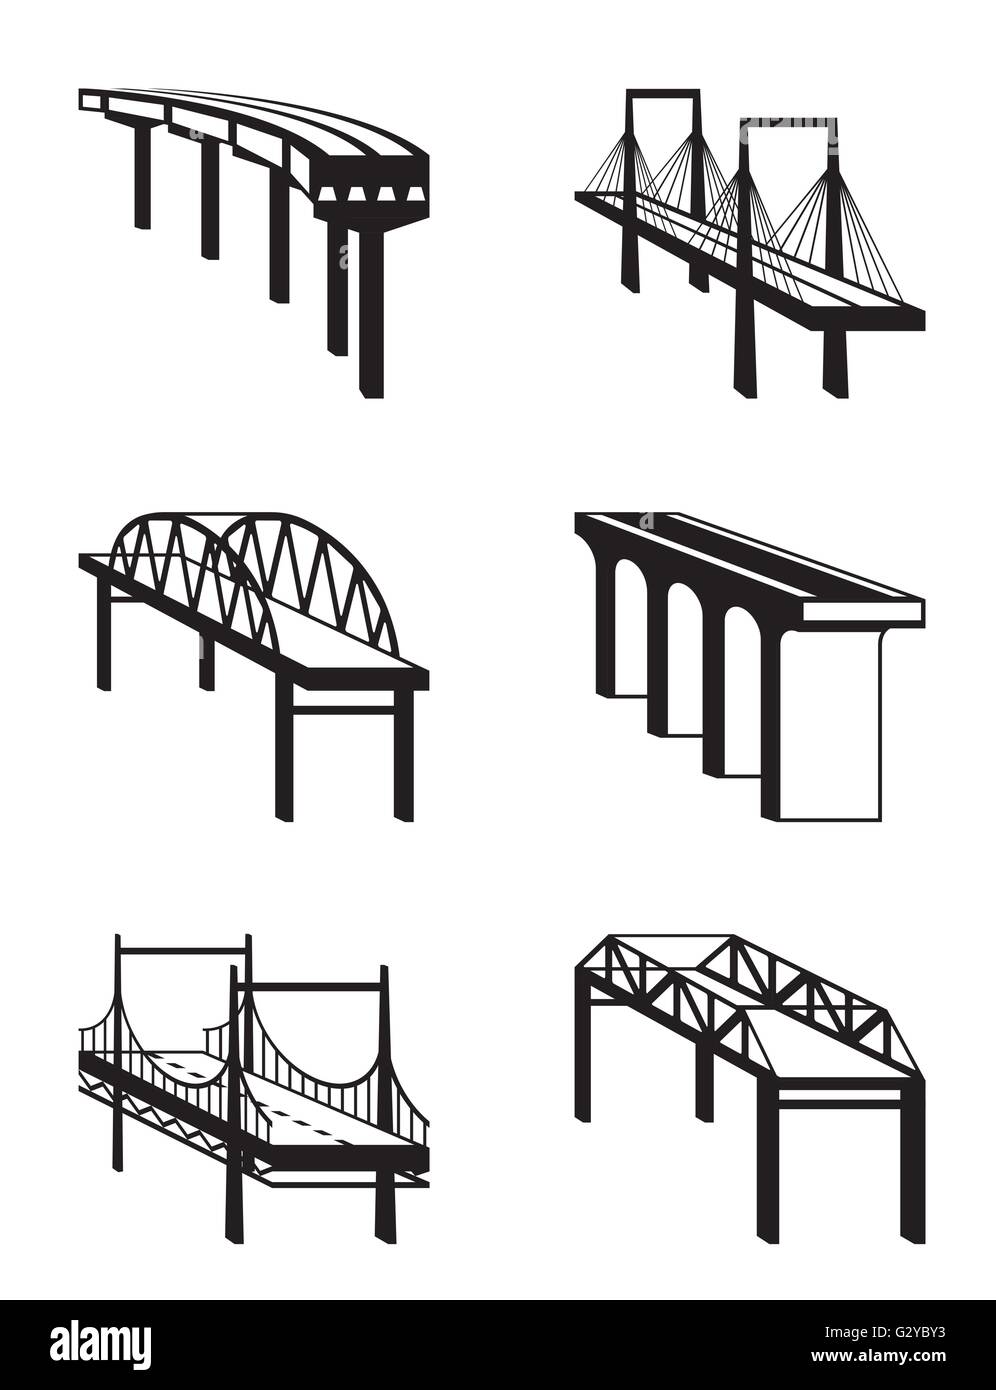 Vari ponti in prospettiva - illustrazione vettoriale Illustrazione Vettoriale